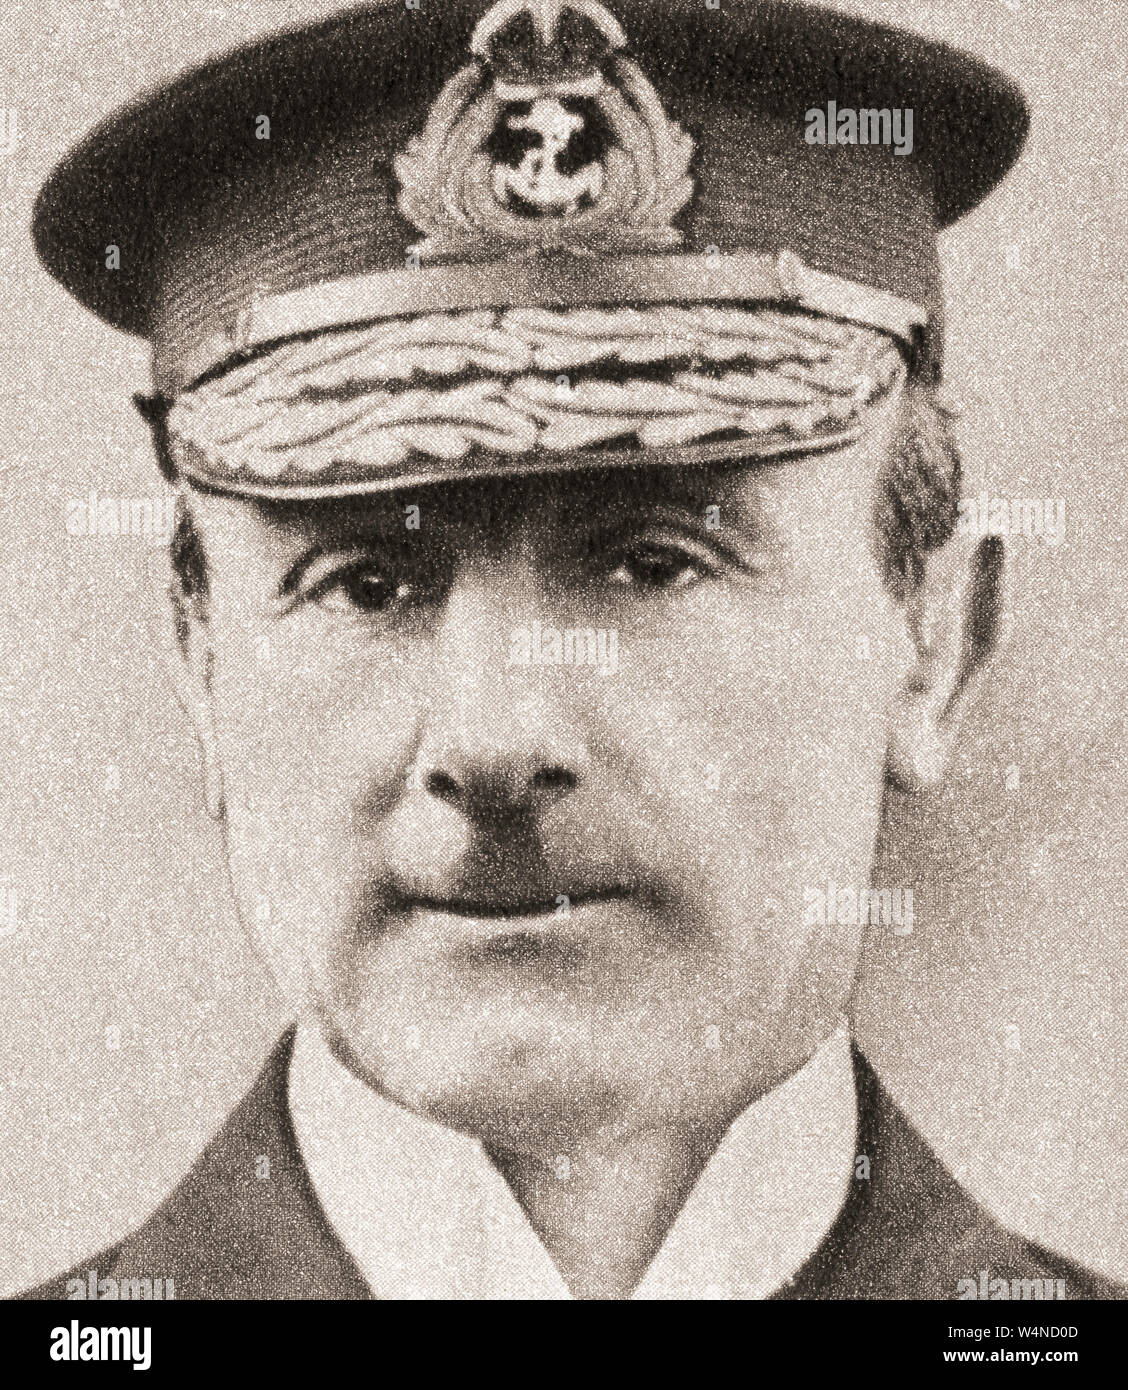 Admiral der Flotte John rushworth Jellicoe, 1 Earl Jellicoe, 1859 - 1935. Royal Navy Officer. Aus dem Festzug des Jahrhunderts, veröffentlicht 1934. Stockfoto